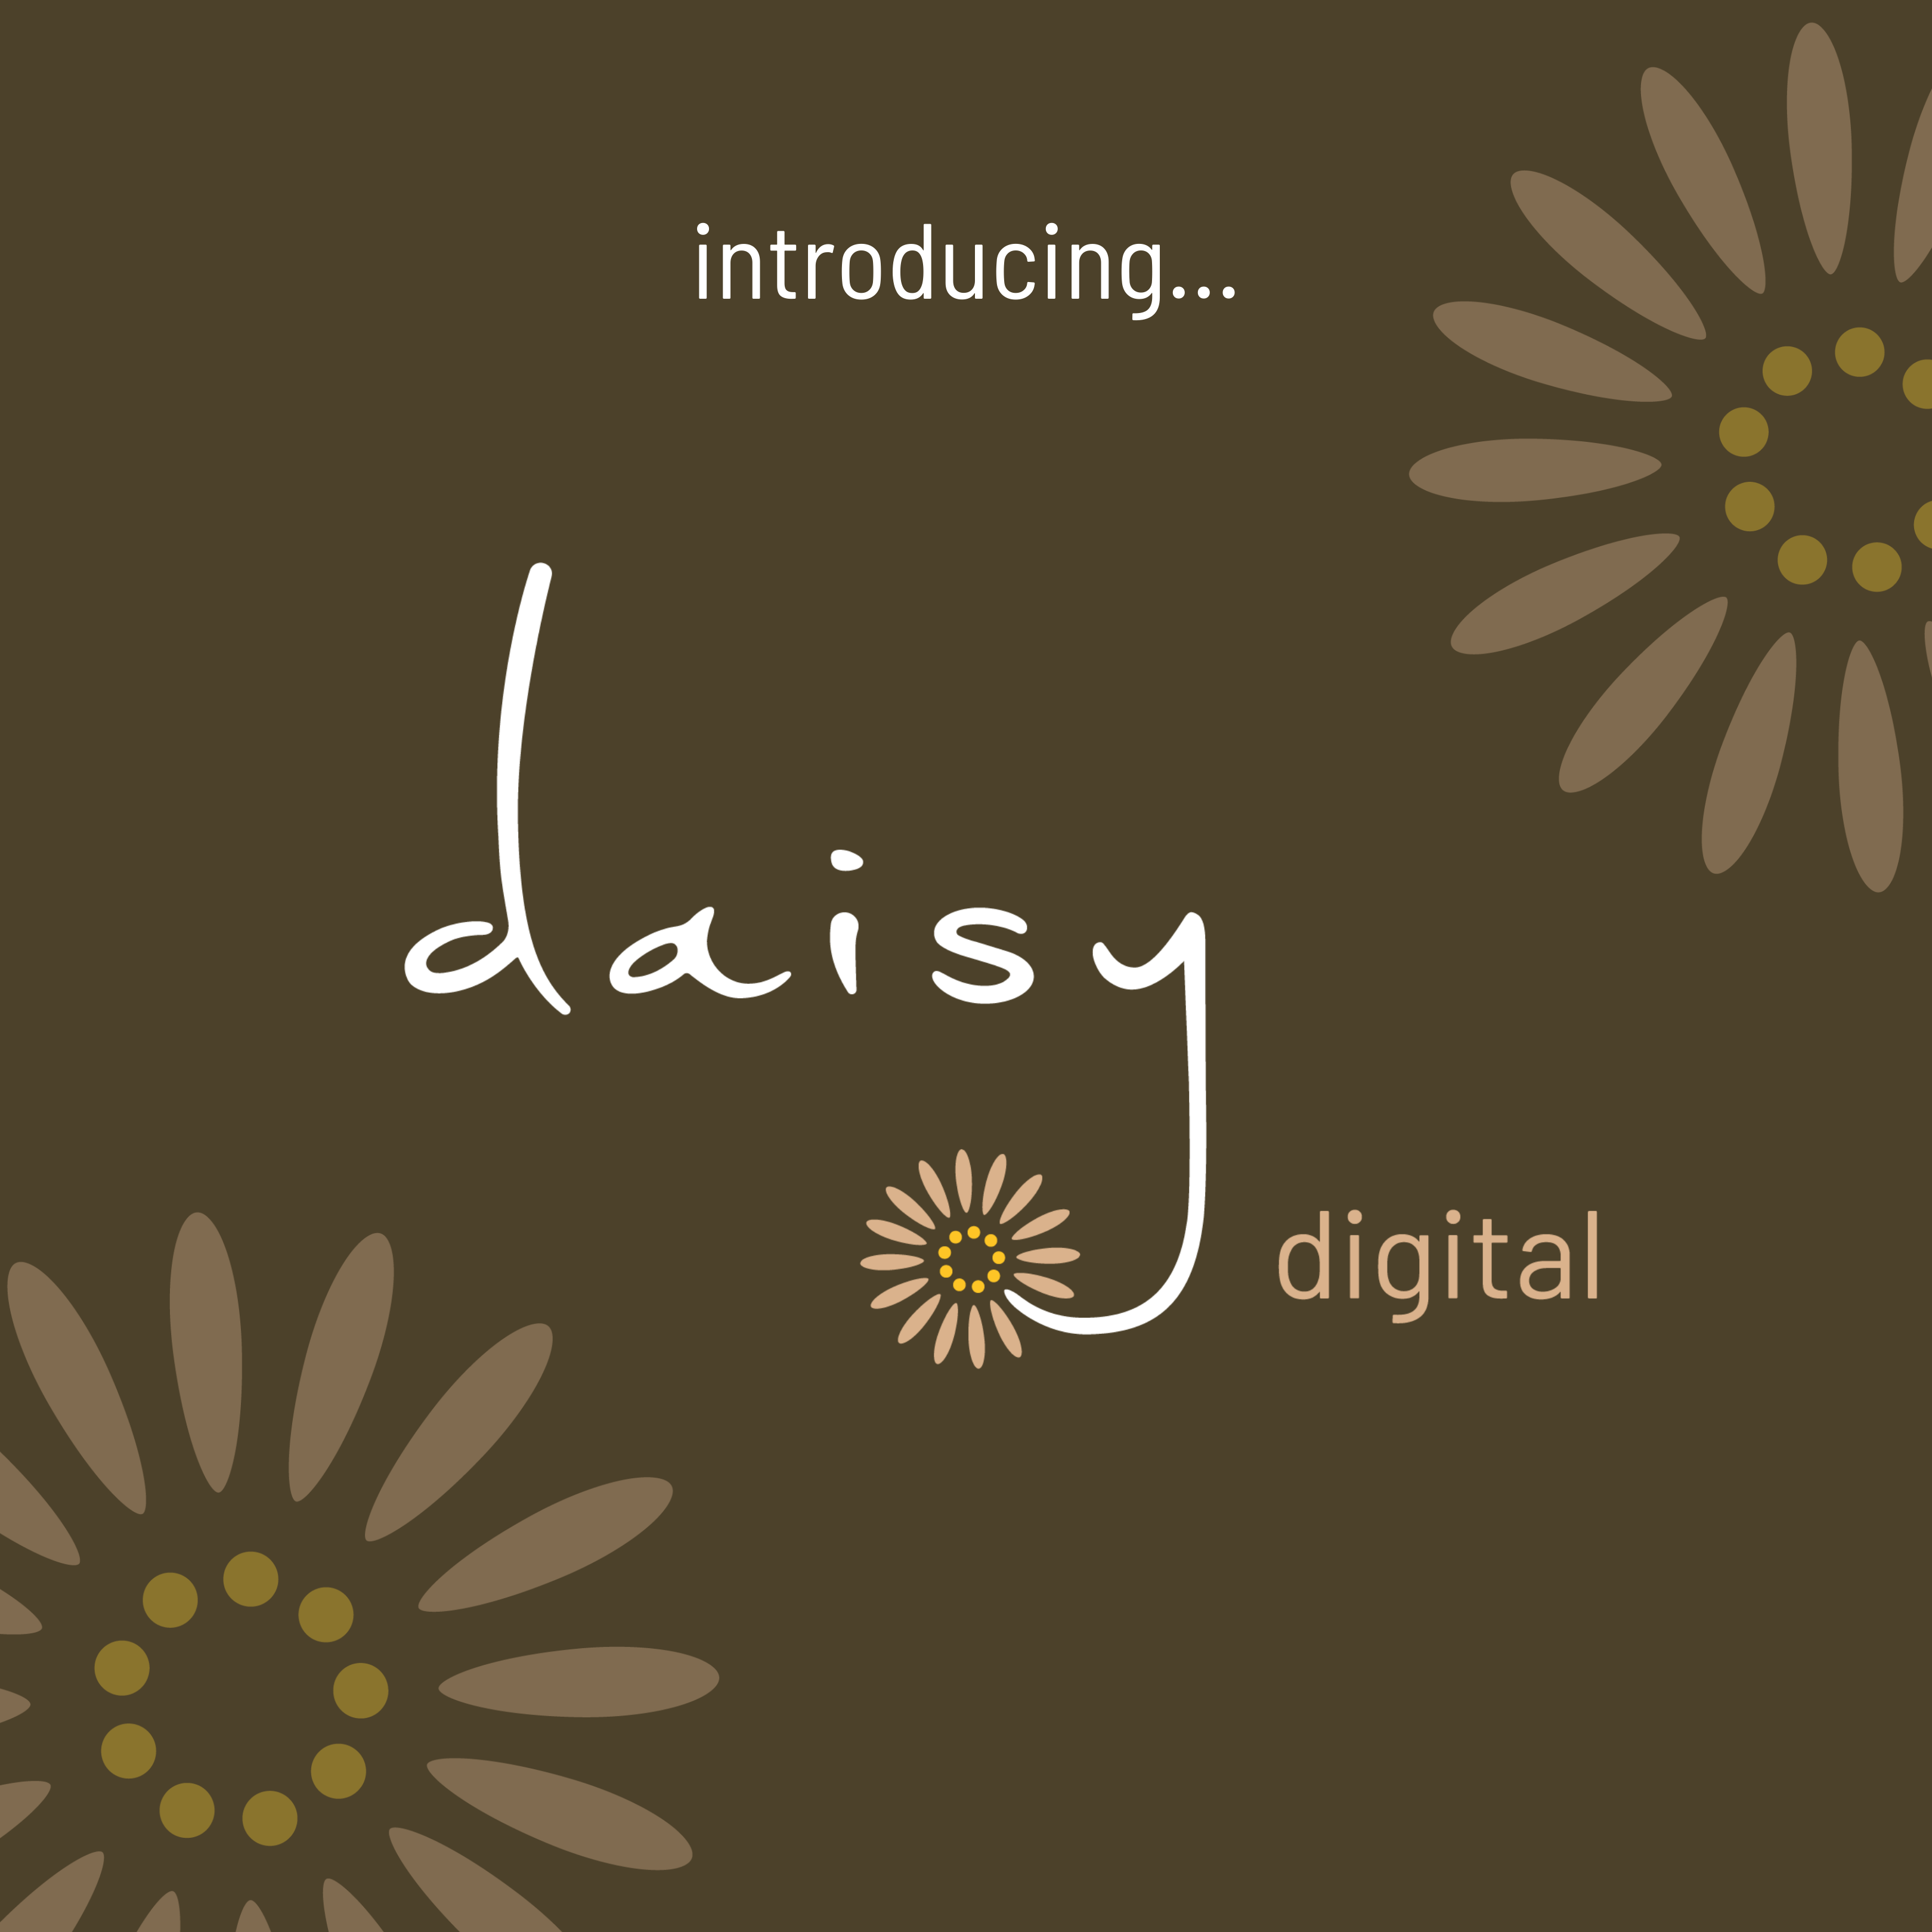 introducing daisy digital